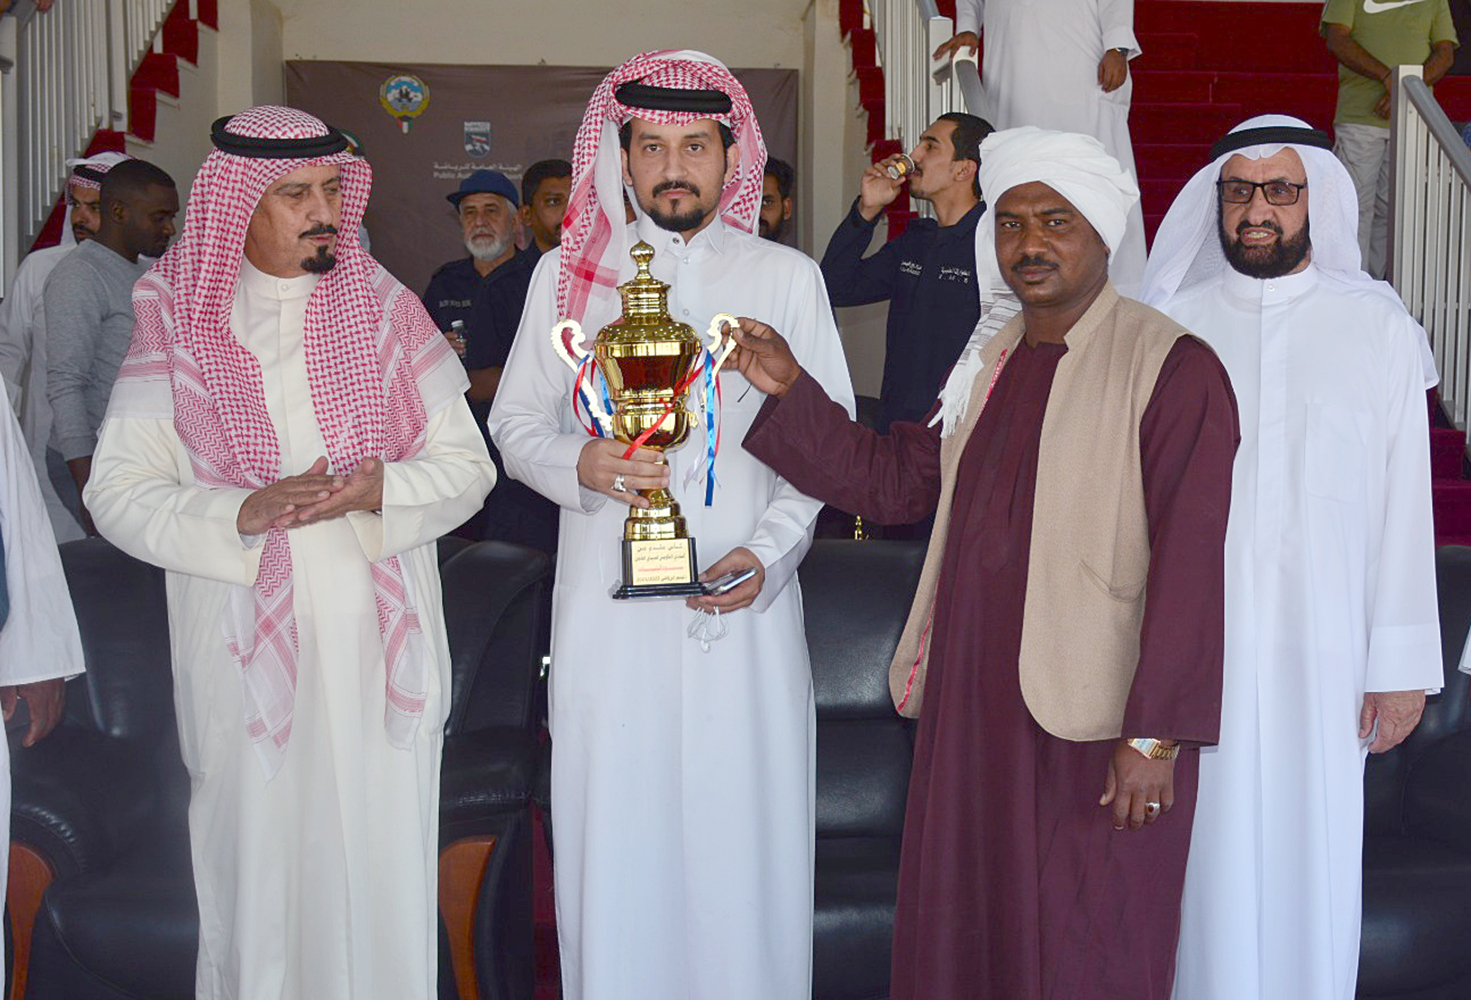 Kuwait camels' race ends, "Al-Aber" top winner